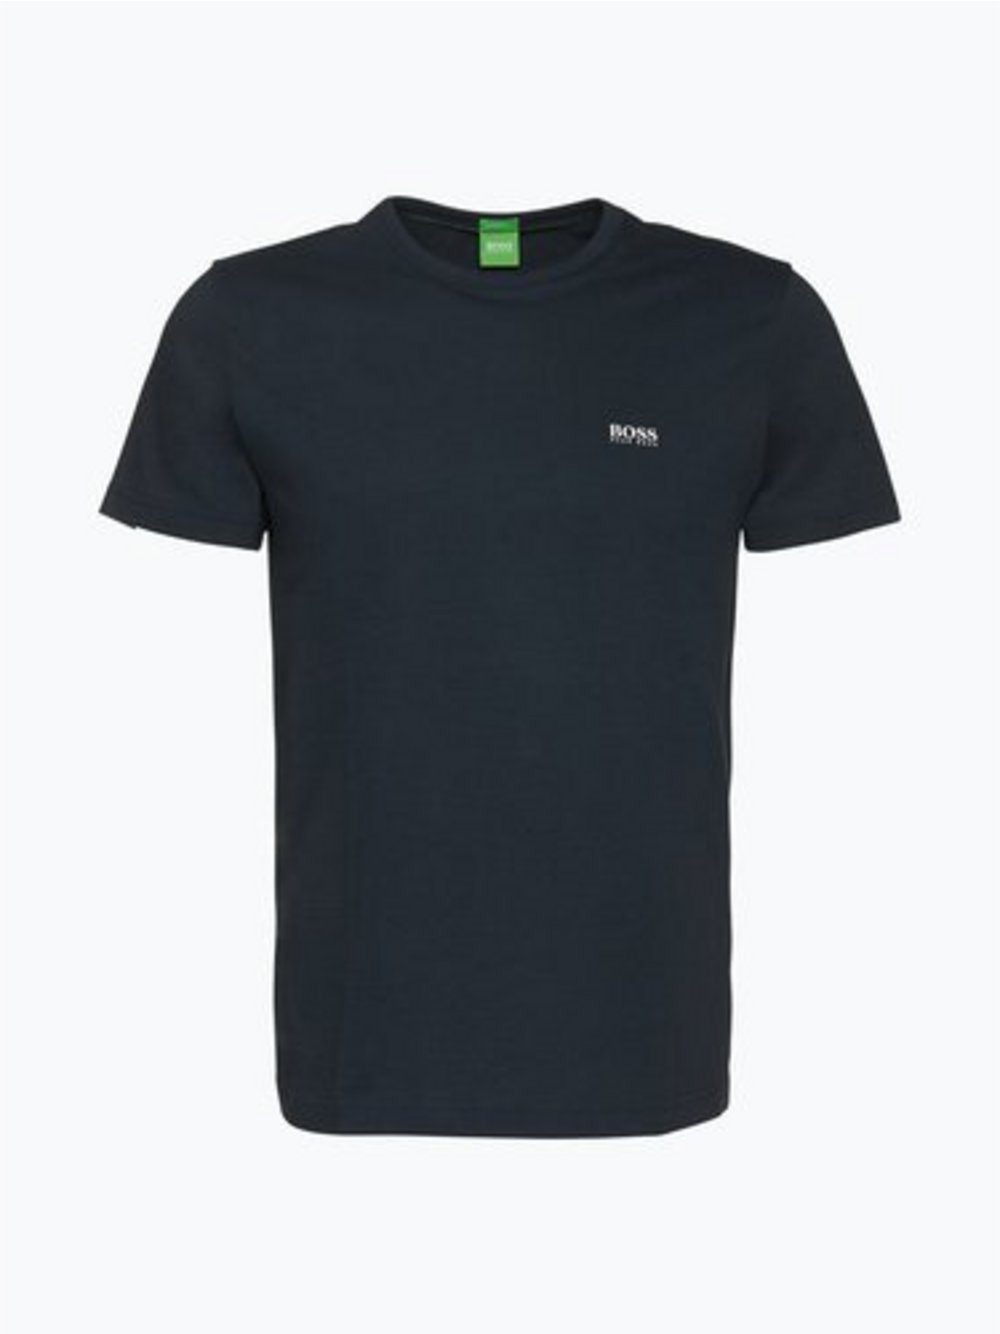 BOSS Athleisure - T-shirt męski – Tee, niebieski